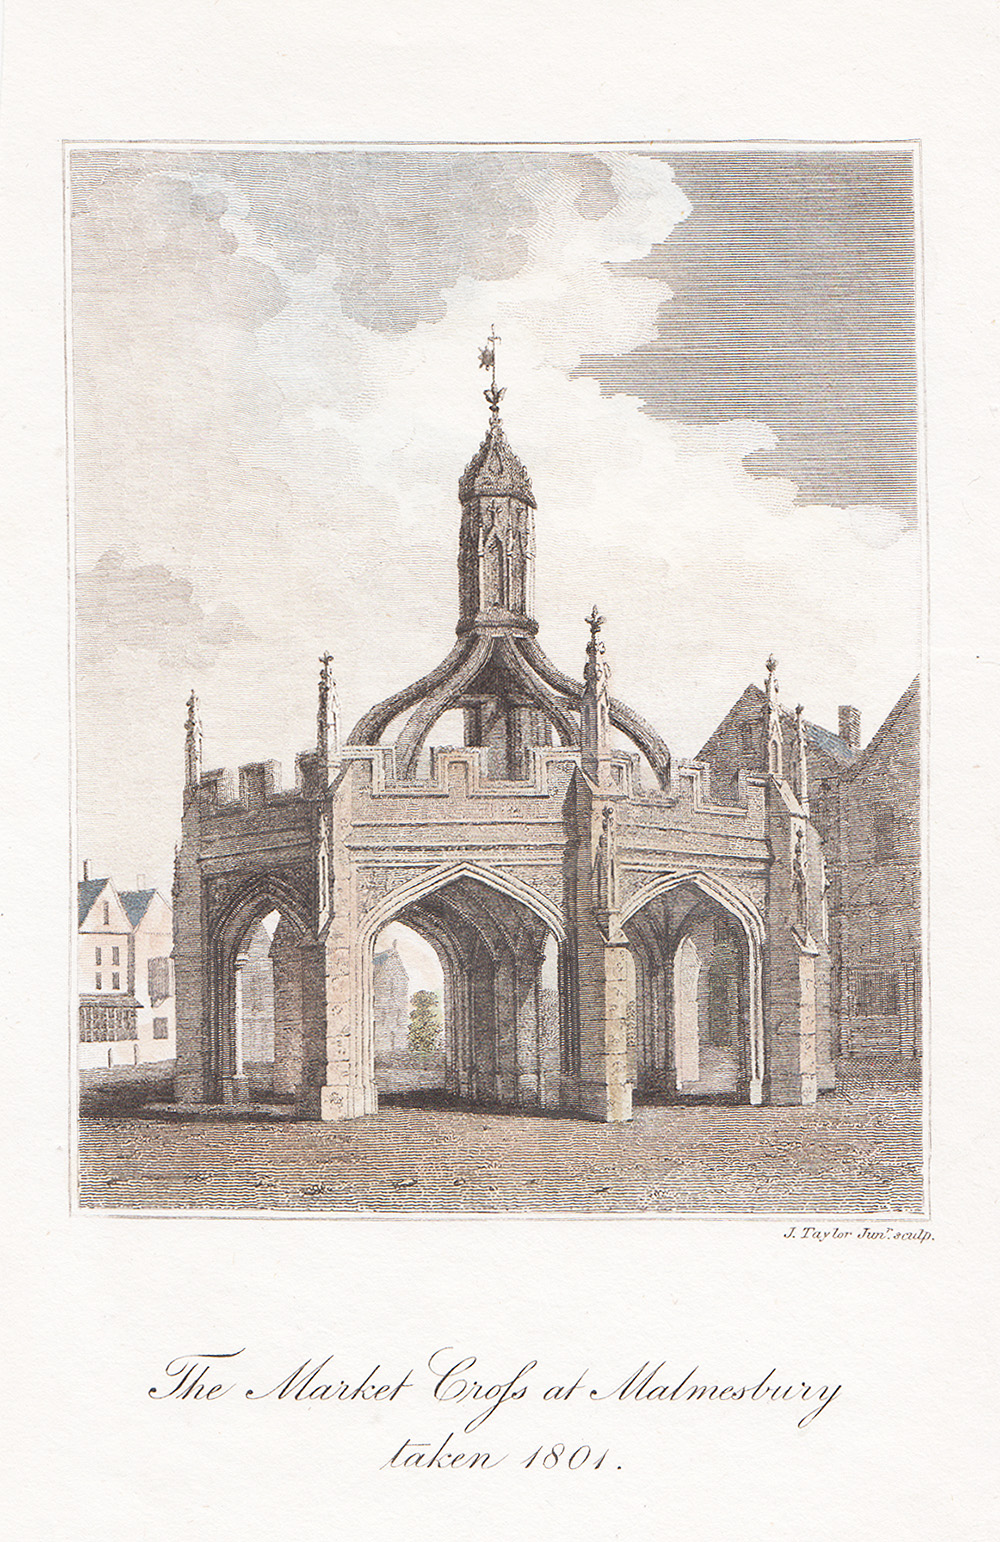 The Market Cross at Malmesbury taken 1801